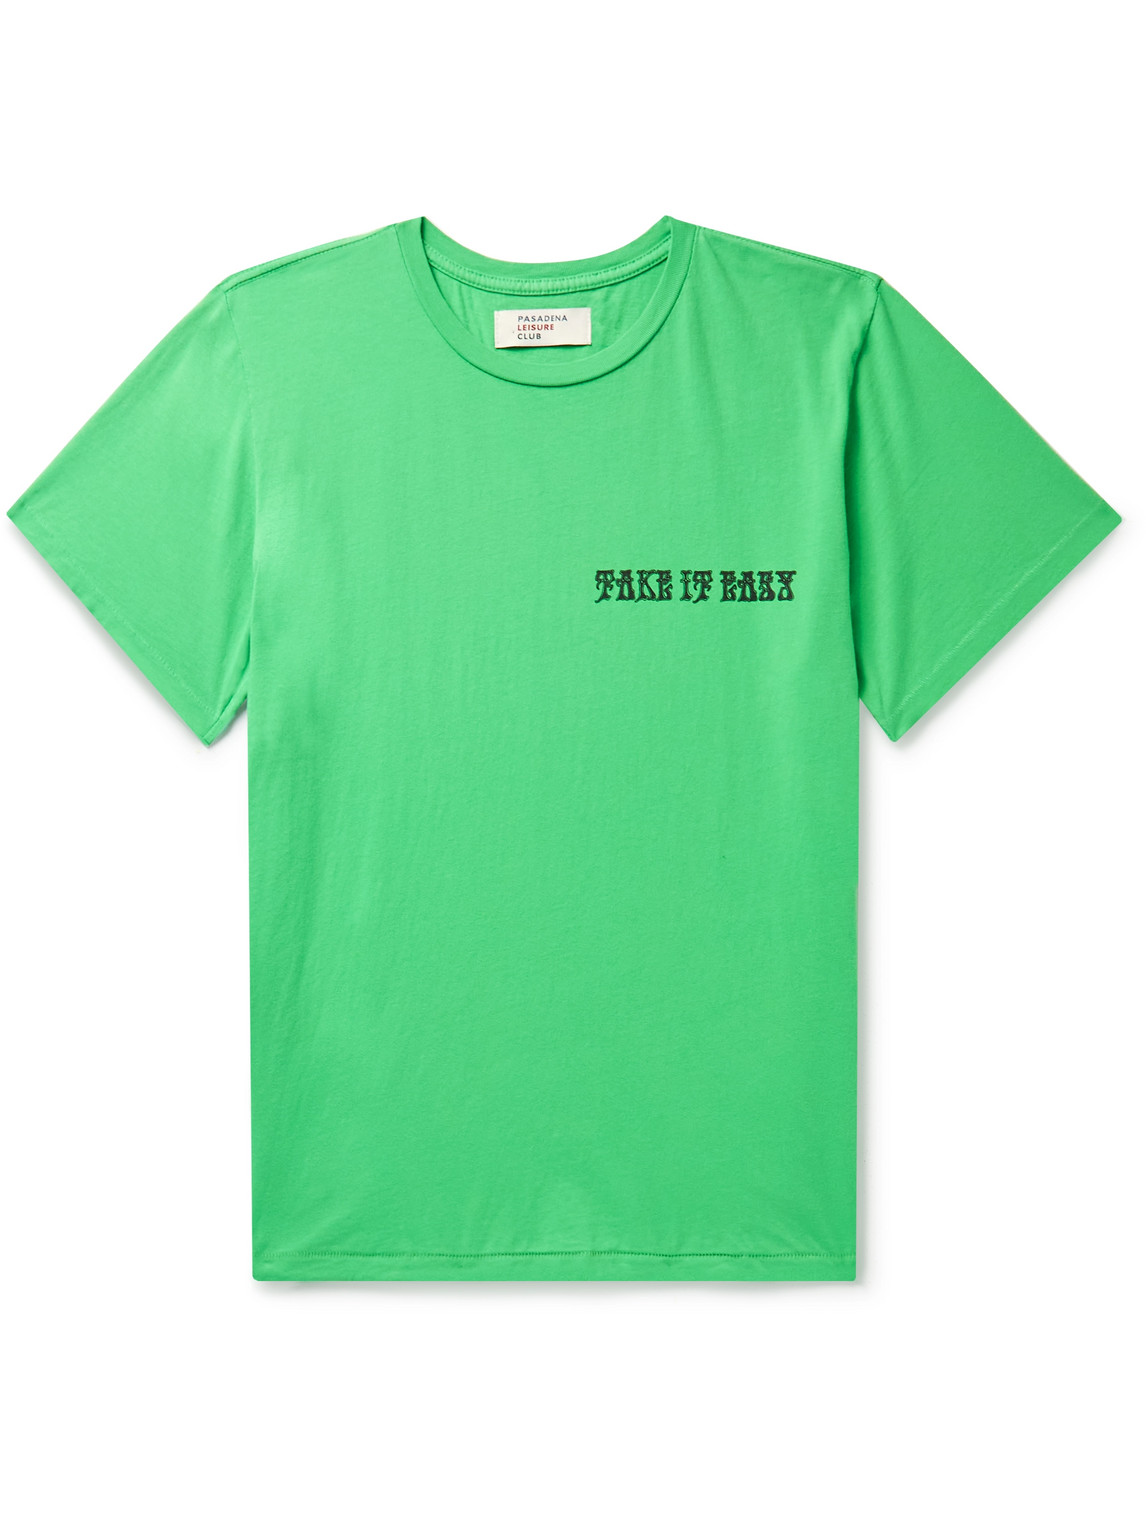 Pasadena Leisure Club Take It Easy Printed Cotton-jersey T-shirt In Green